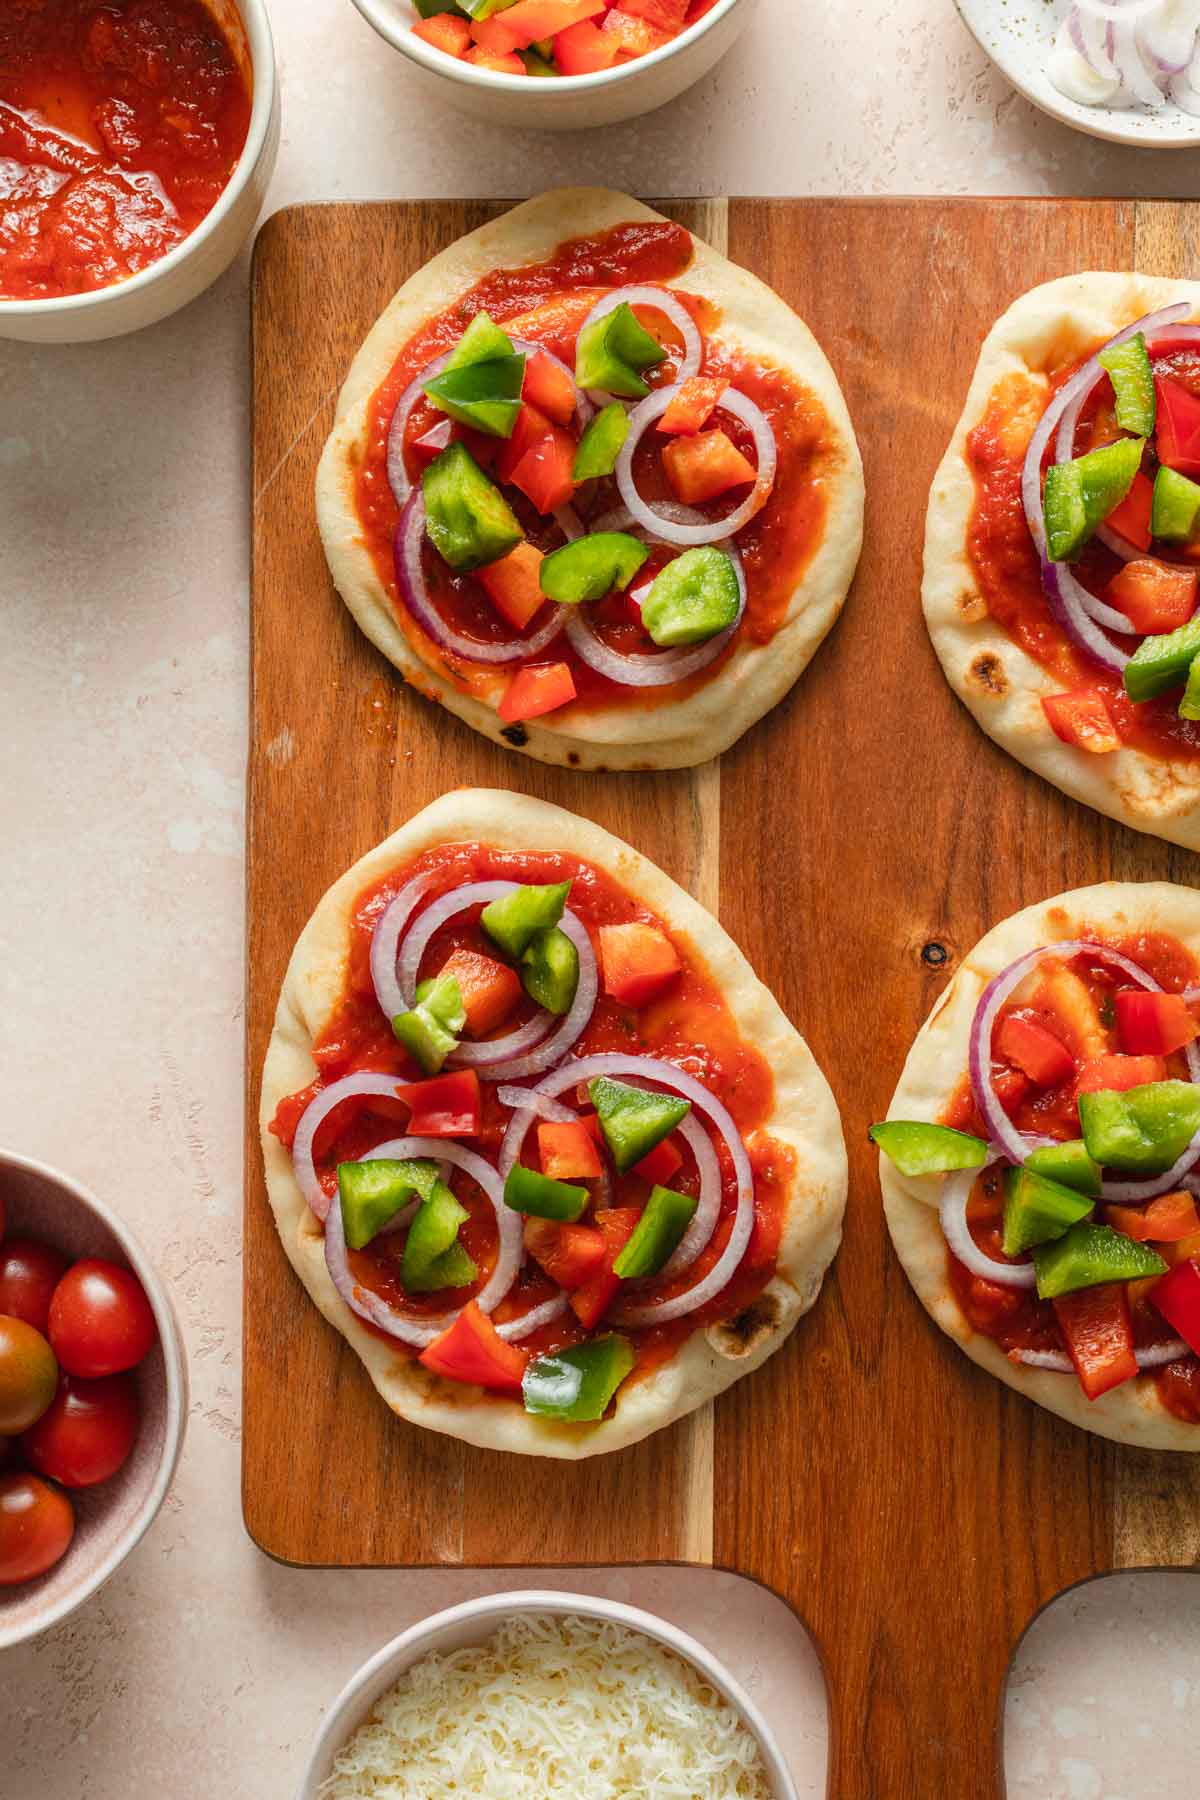 Naan bread mini pizzas with veggies arranged on top.